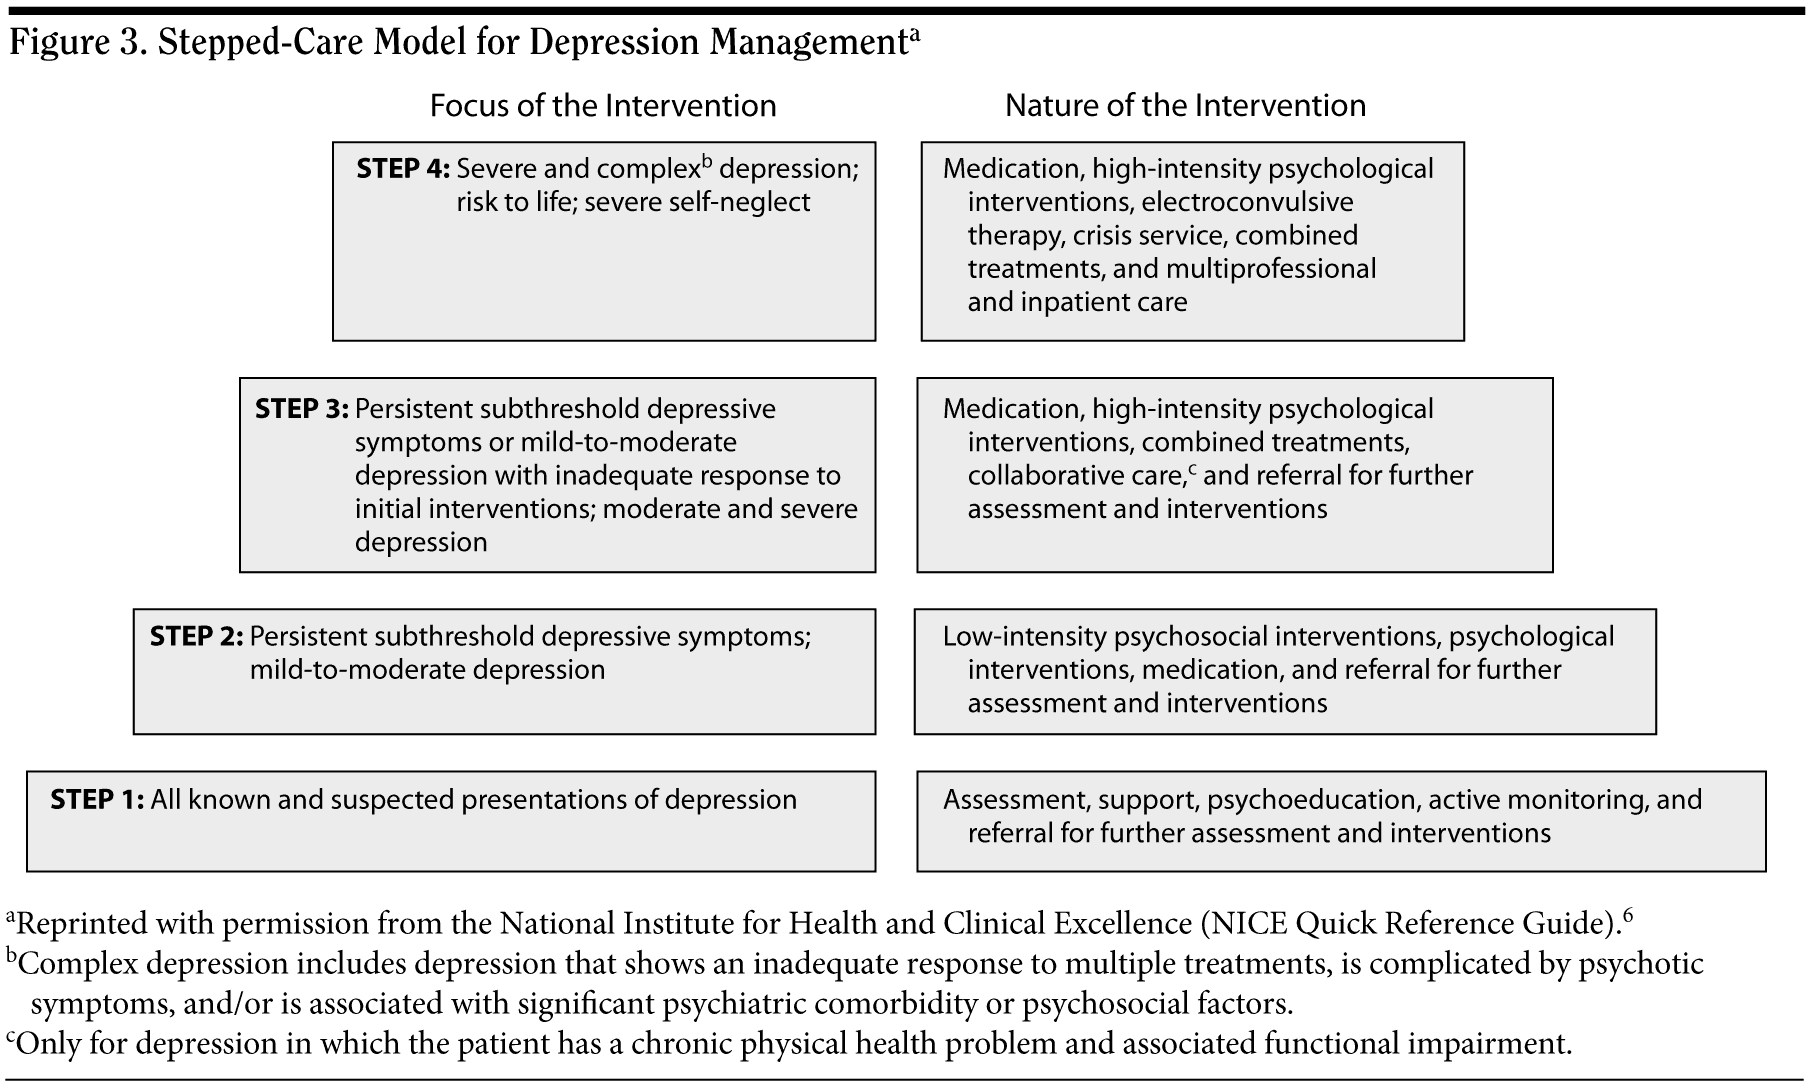 Depression: Symptoms, Risk Factors and Management